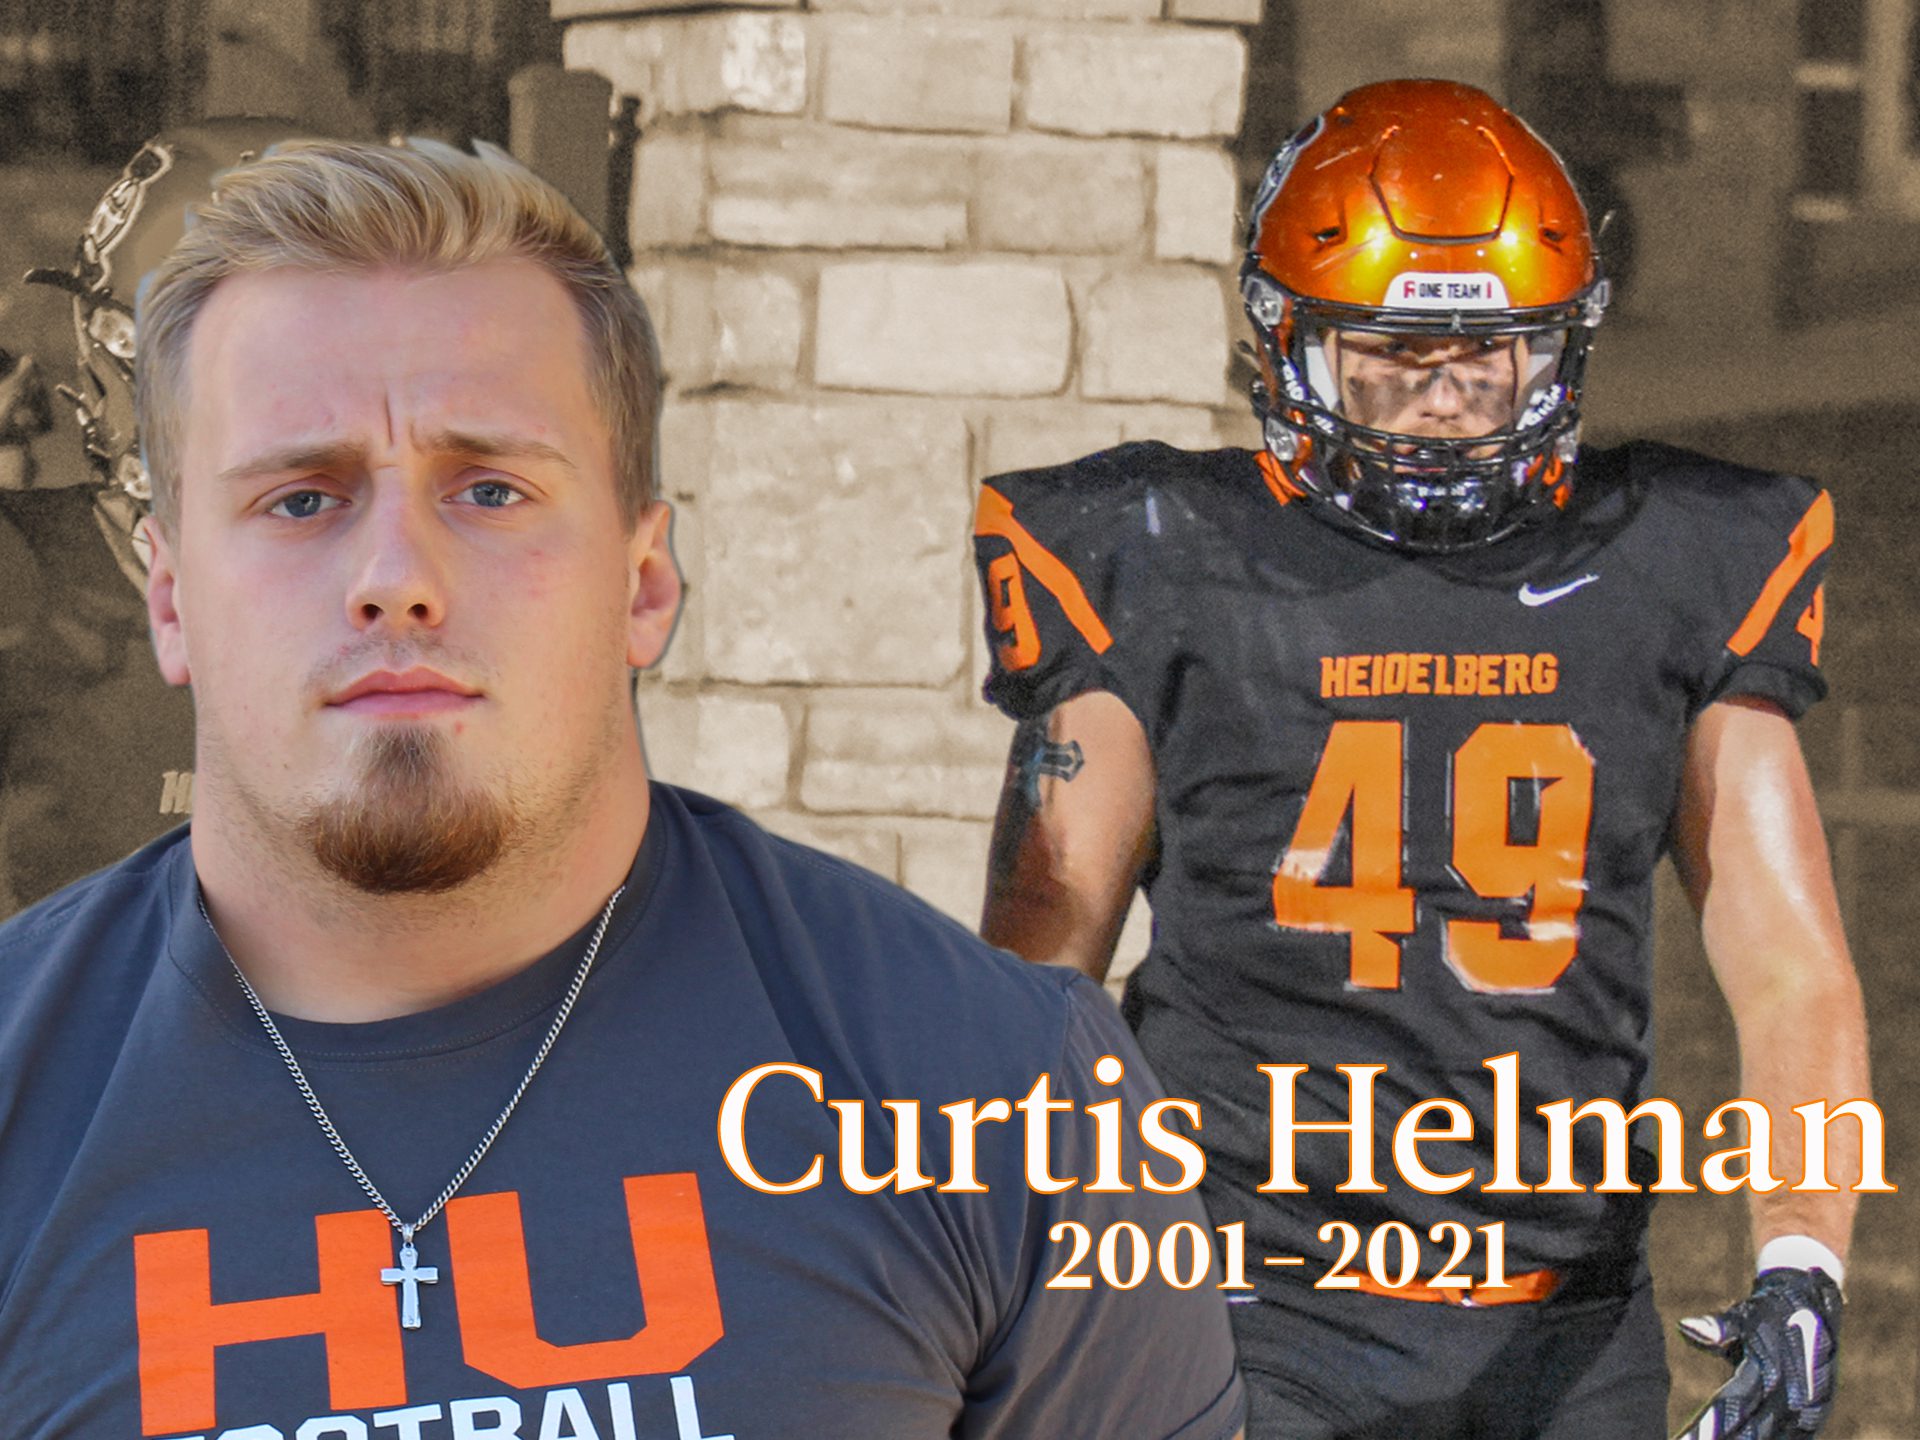 Curtis Helman killed in ATV crash football player Heidelberg